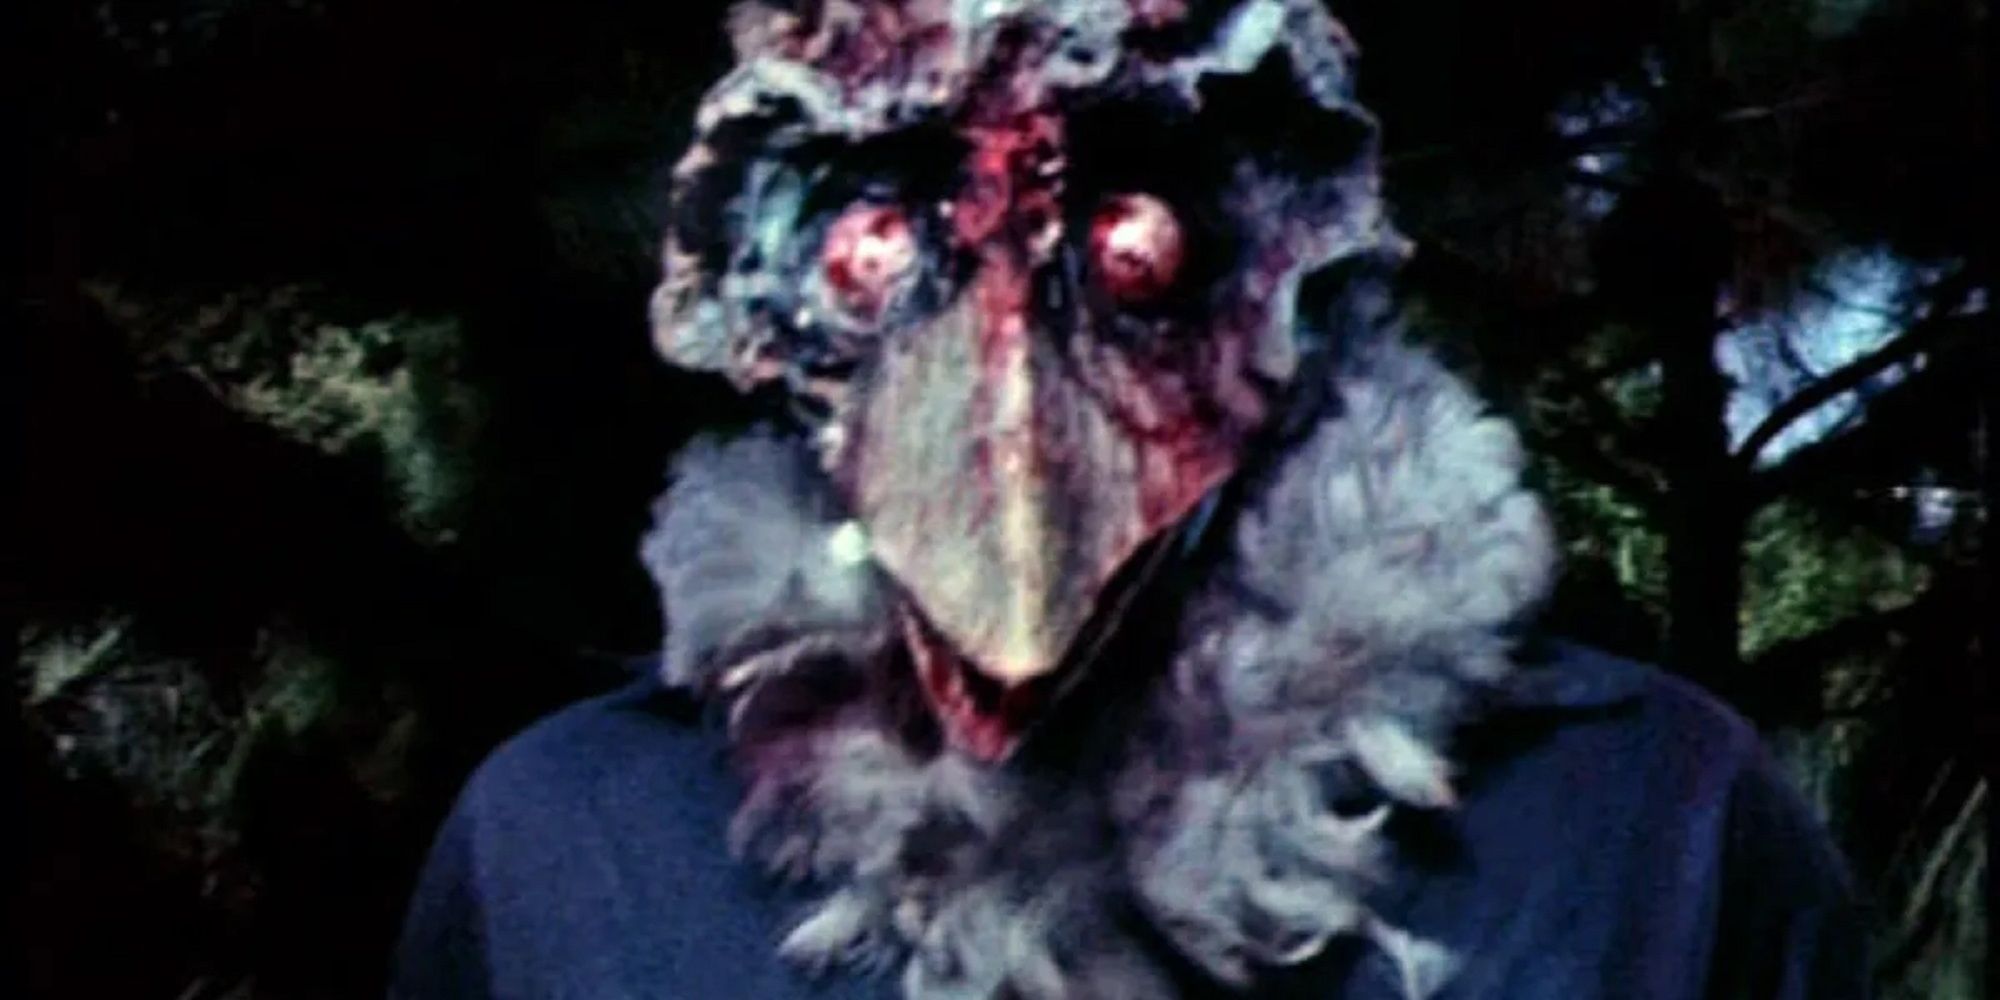 Herschel after turning into a giant, terrifying turkey in 'Blood Freak'.